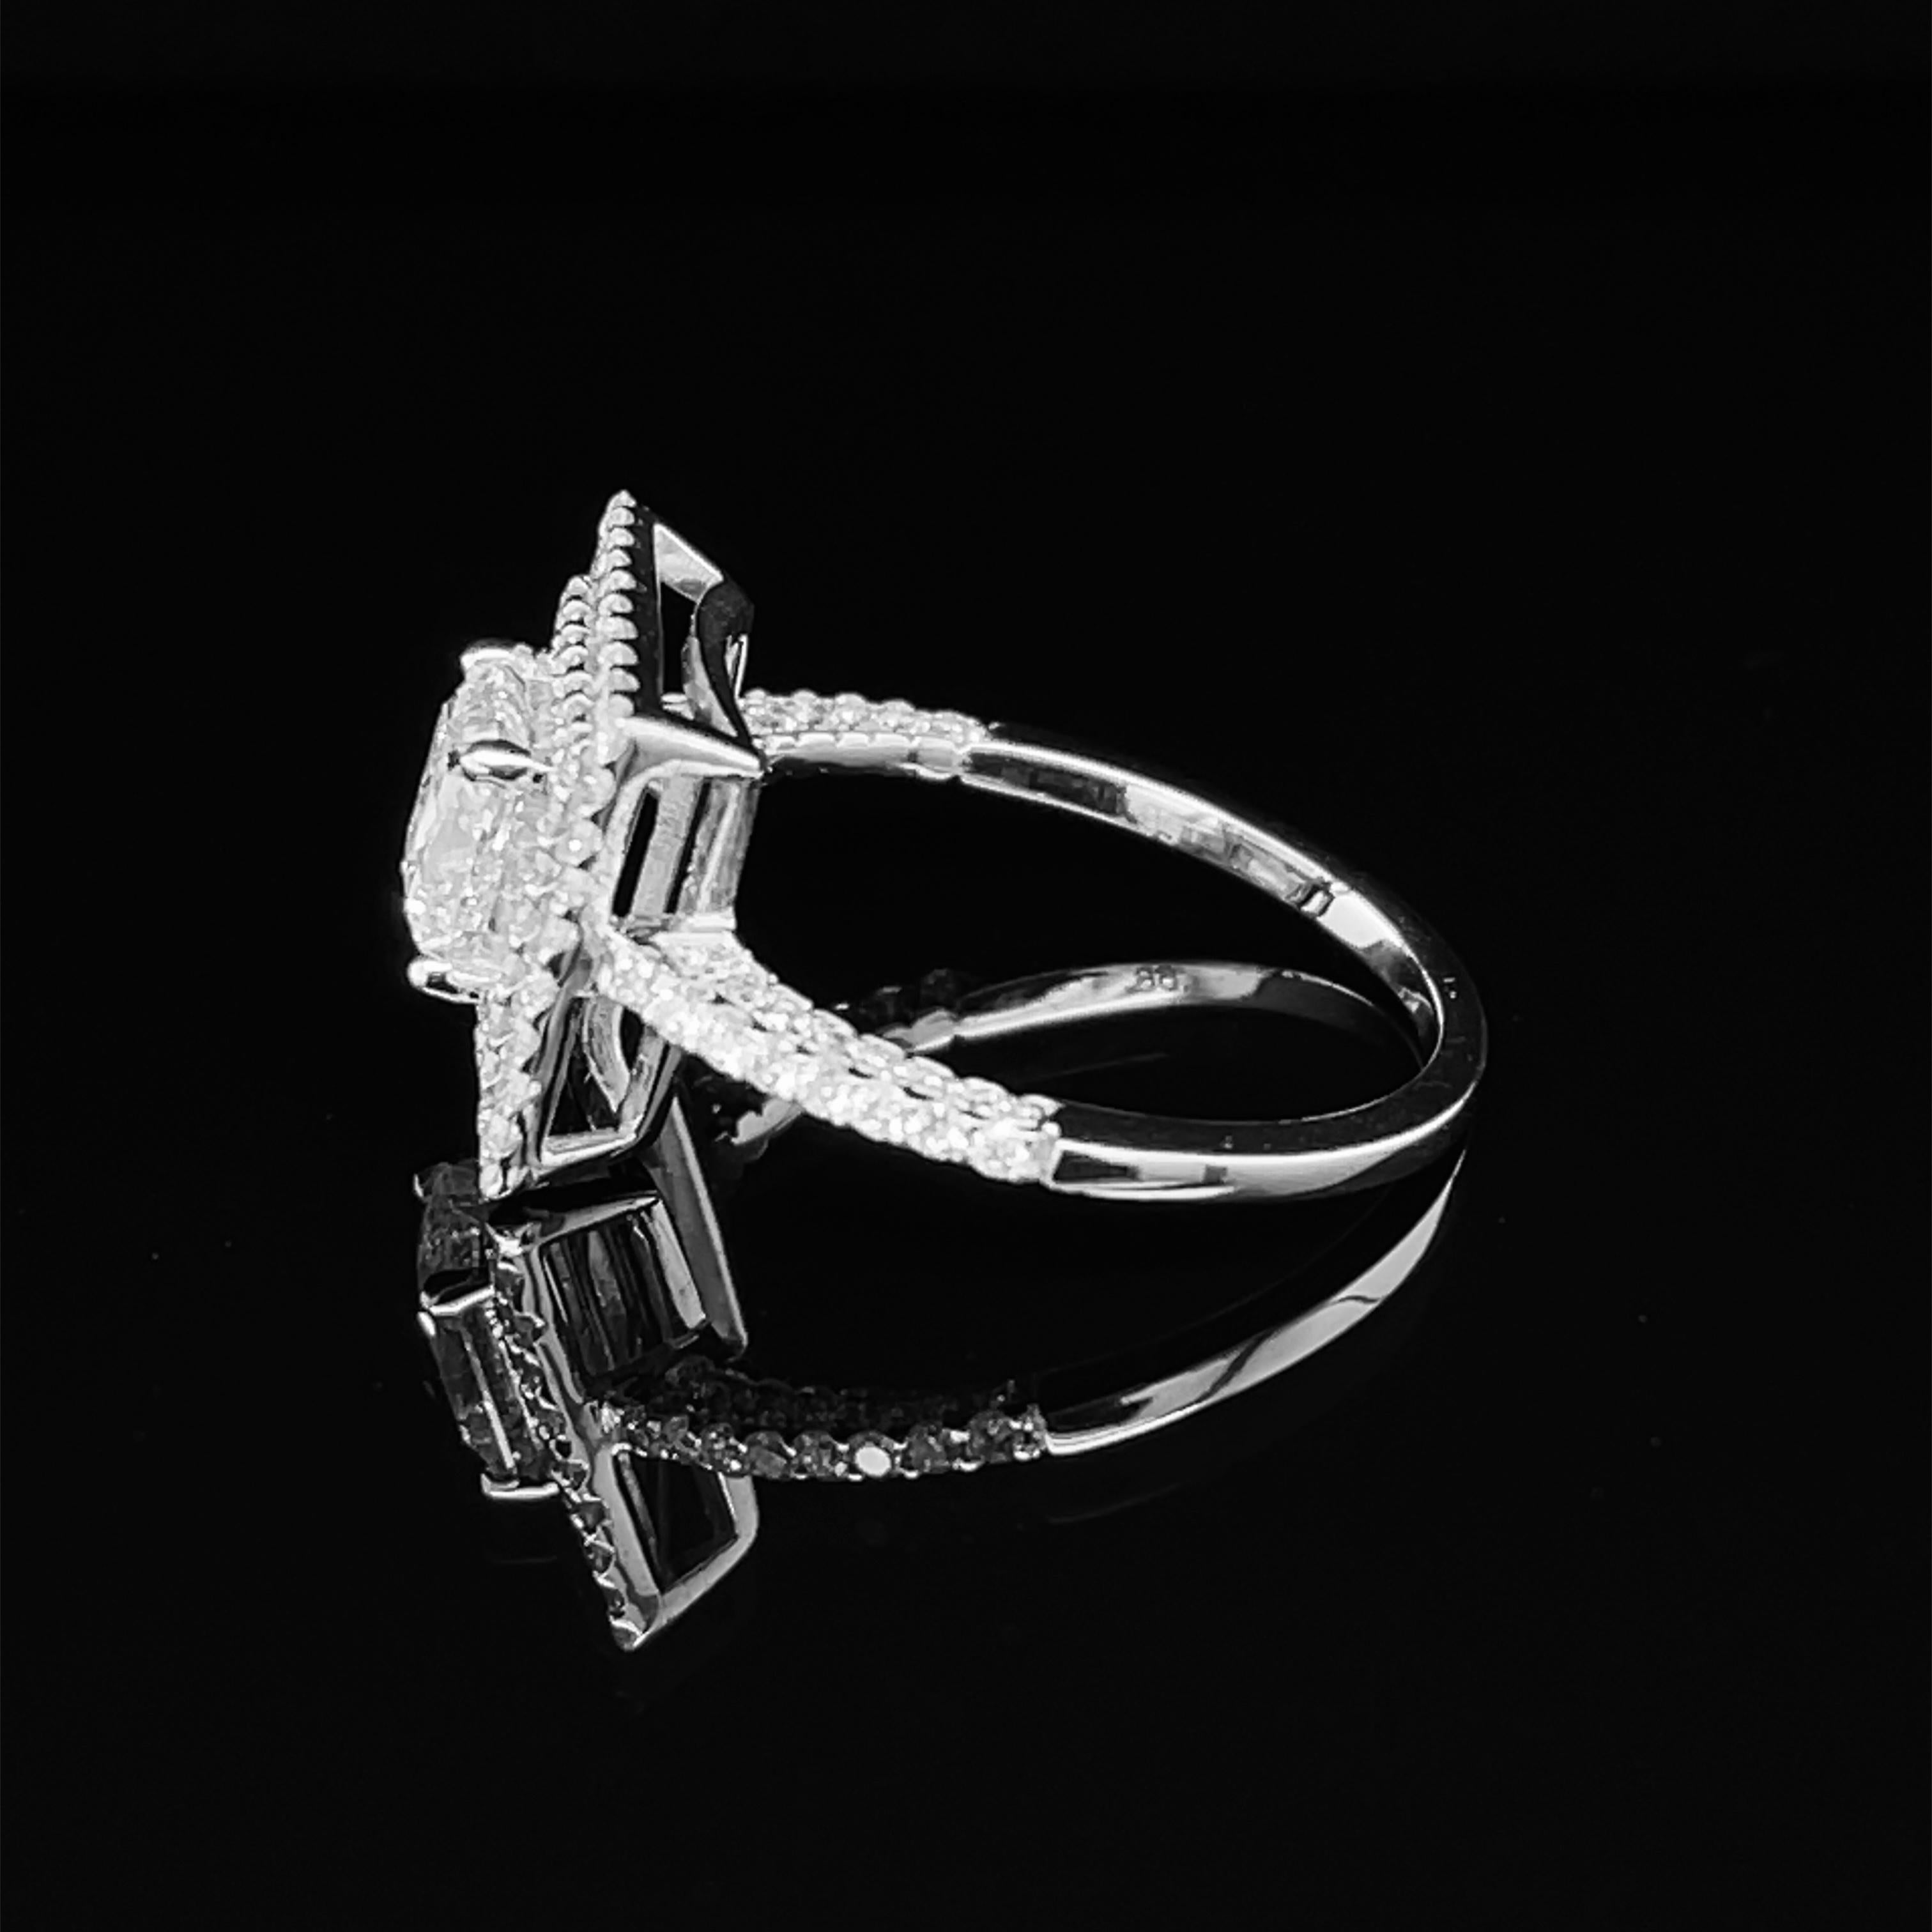 GIA Certified Princess Cut 1.01 Carat F VVS2 Diamond Ring in 18K White Gold For Sale 4